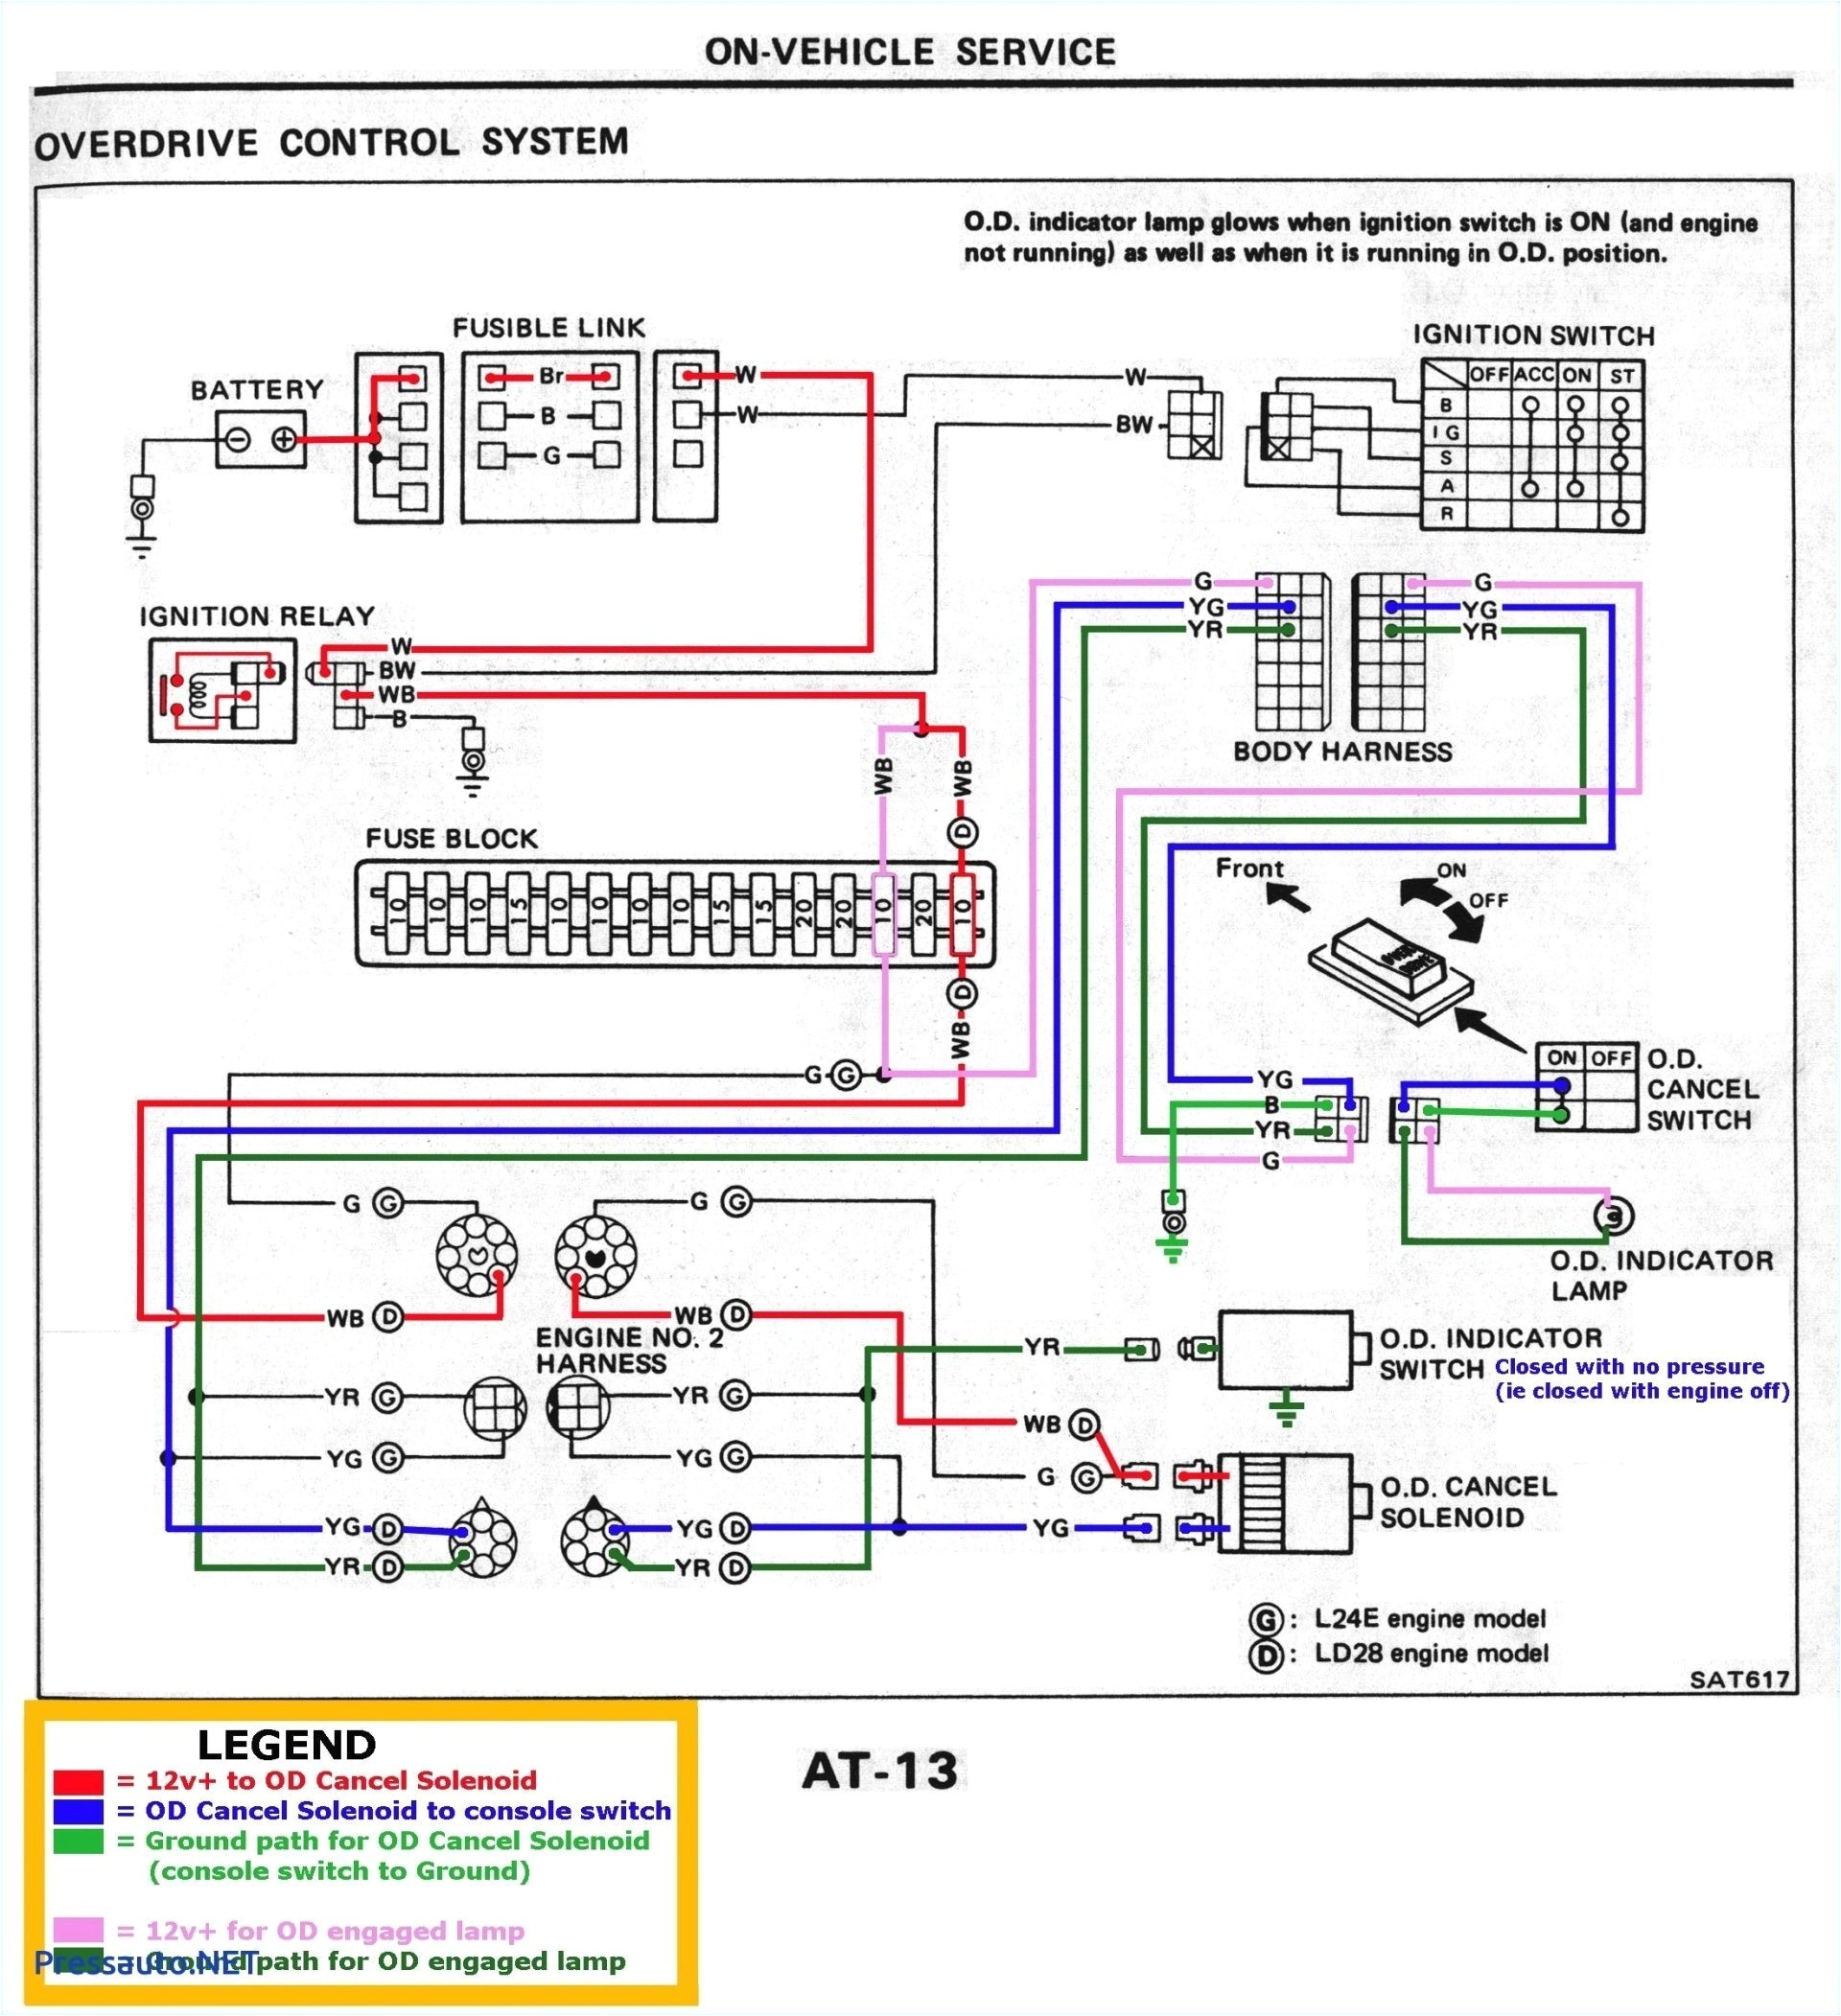 5 wire gm alternator wiring manual e book4 wire alternator diagram chevy manual e bookgm 4